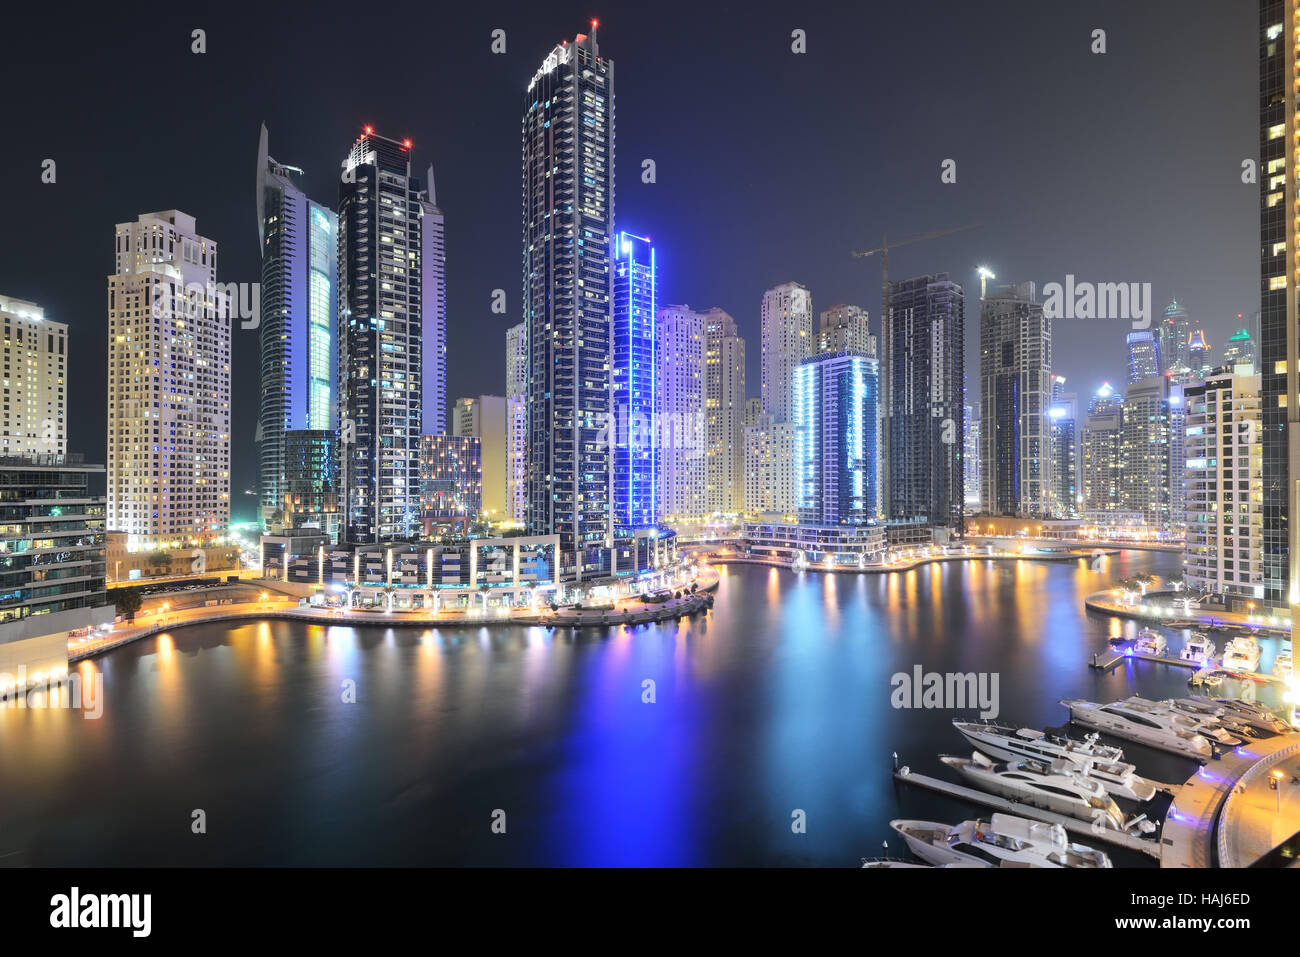 Puerto deportivo de Dubái Foto de stock